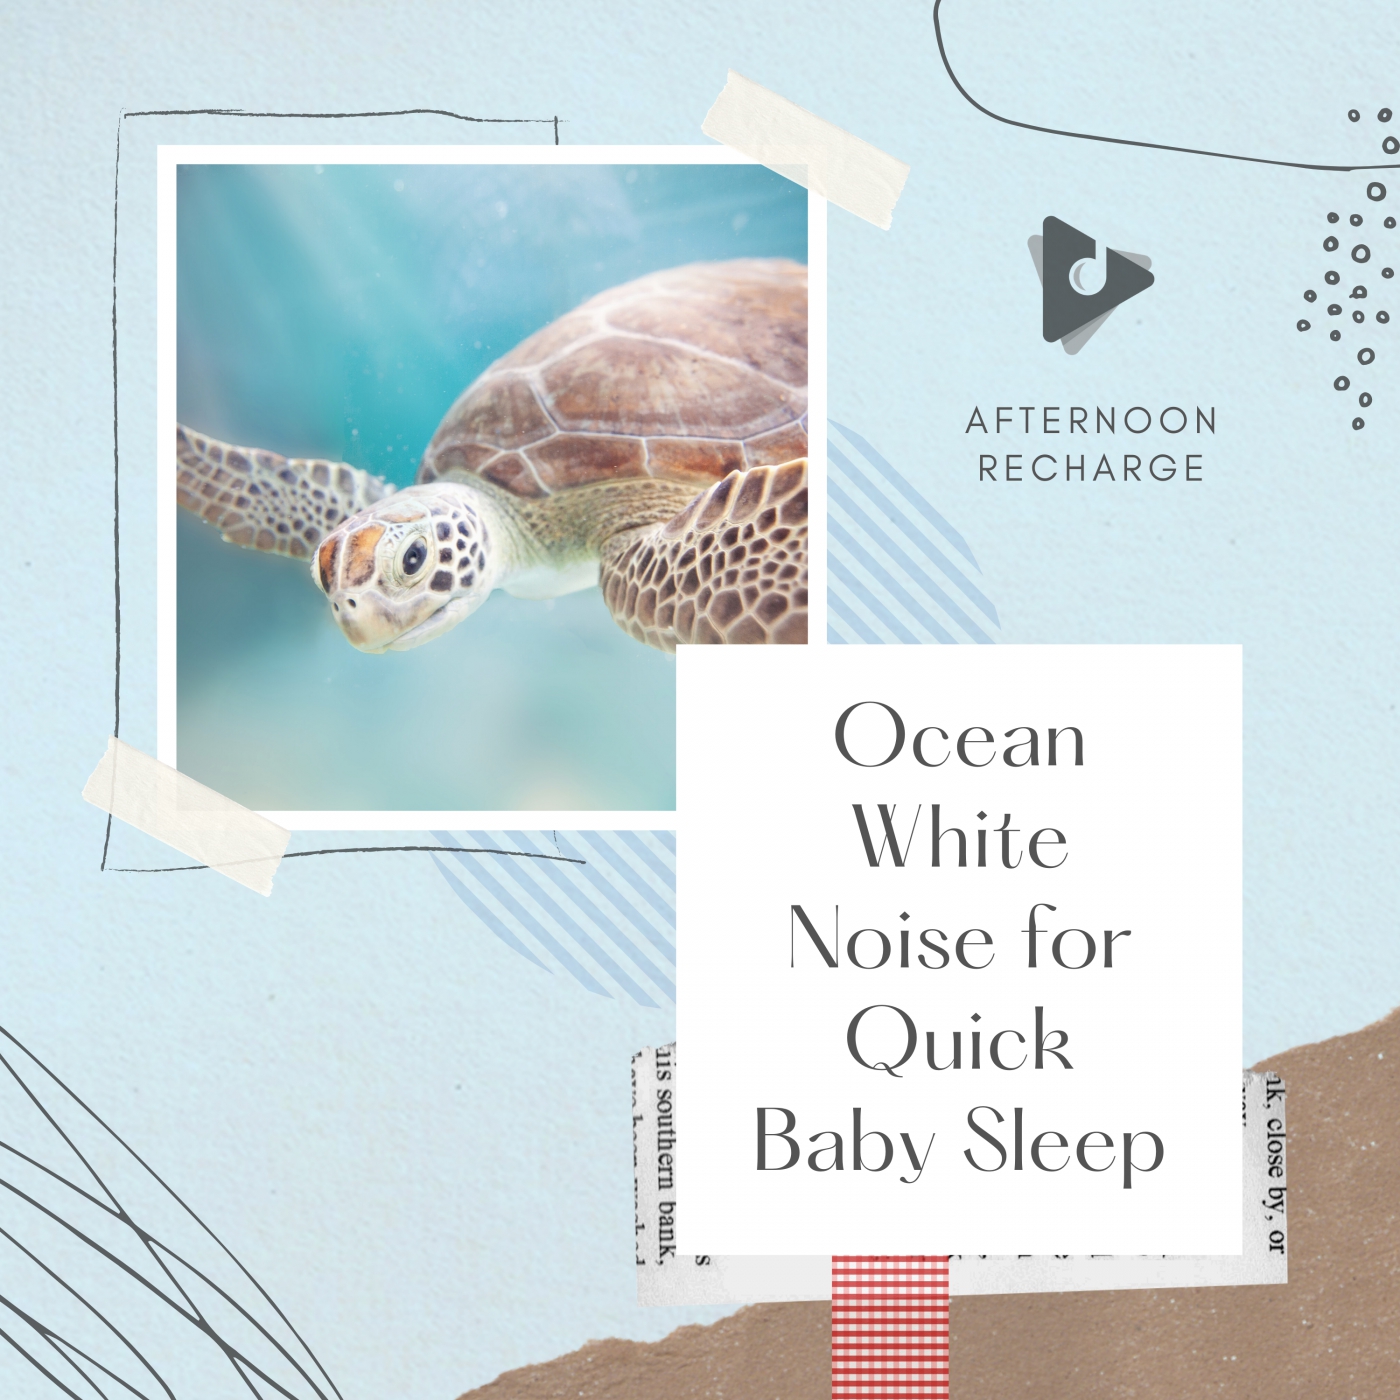 Ocean White Noise for Quick Baby Sleep